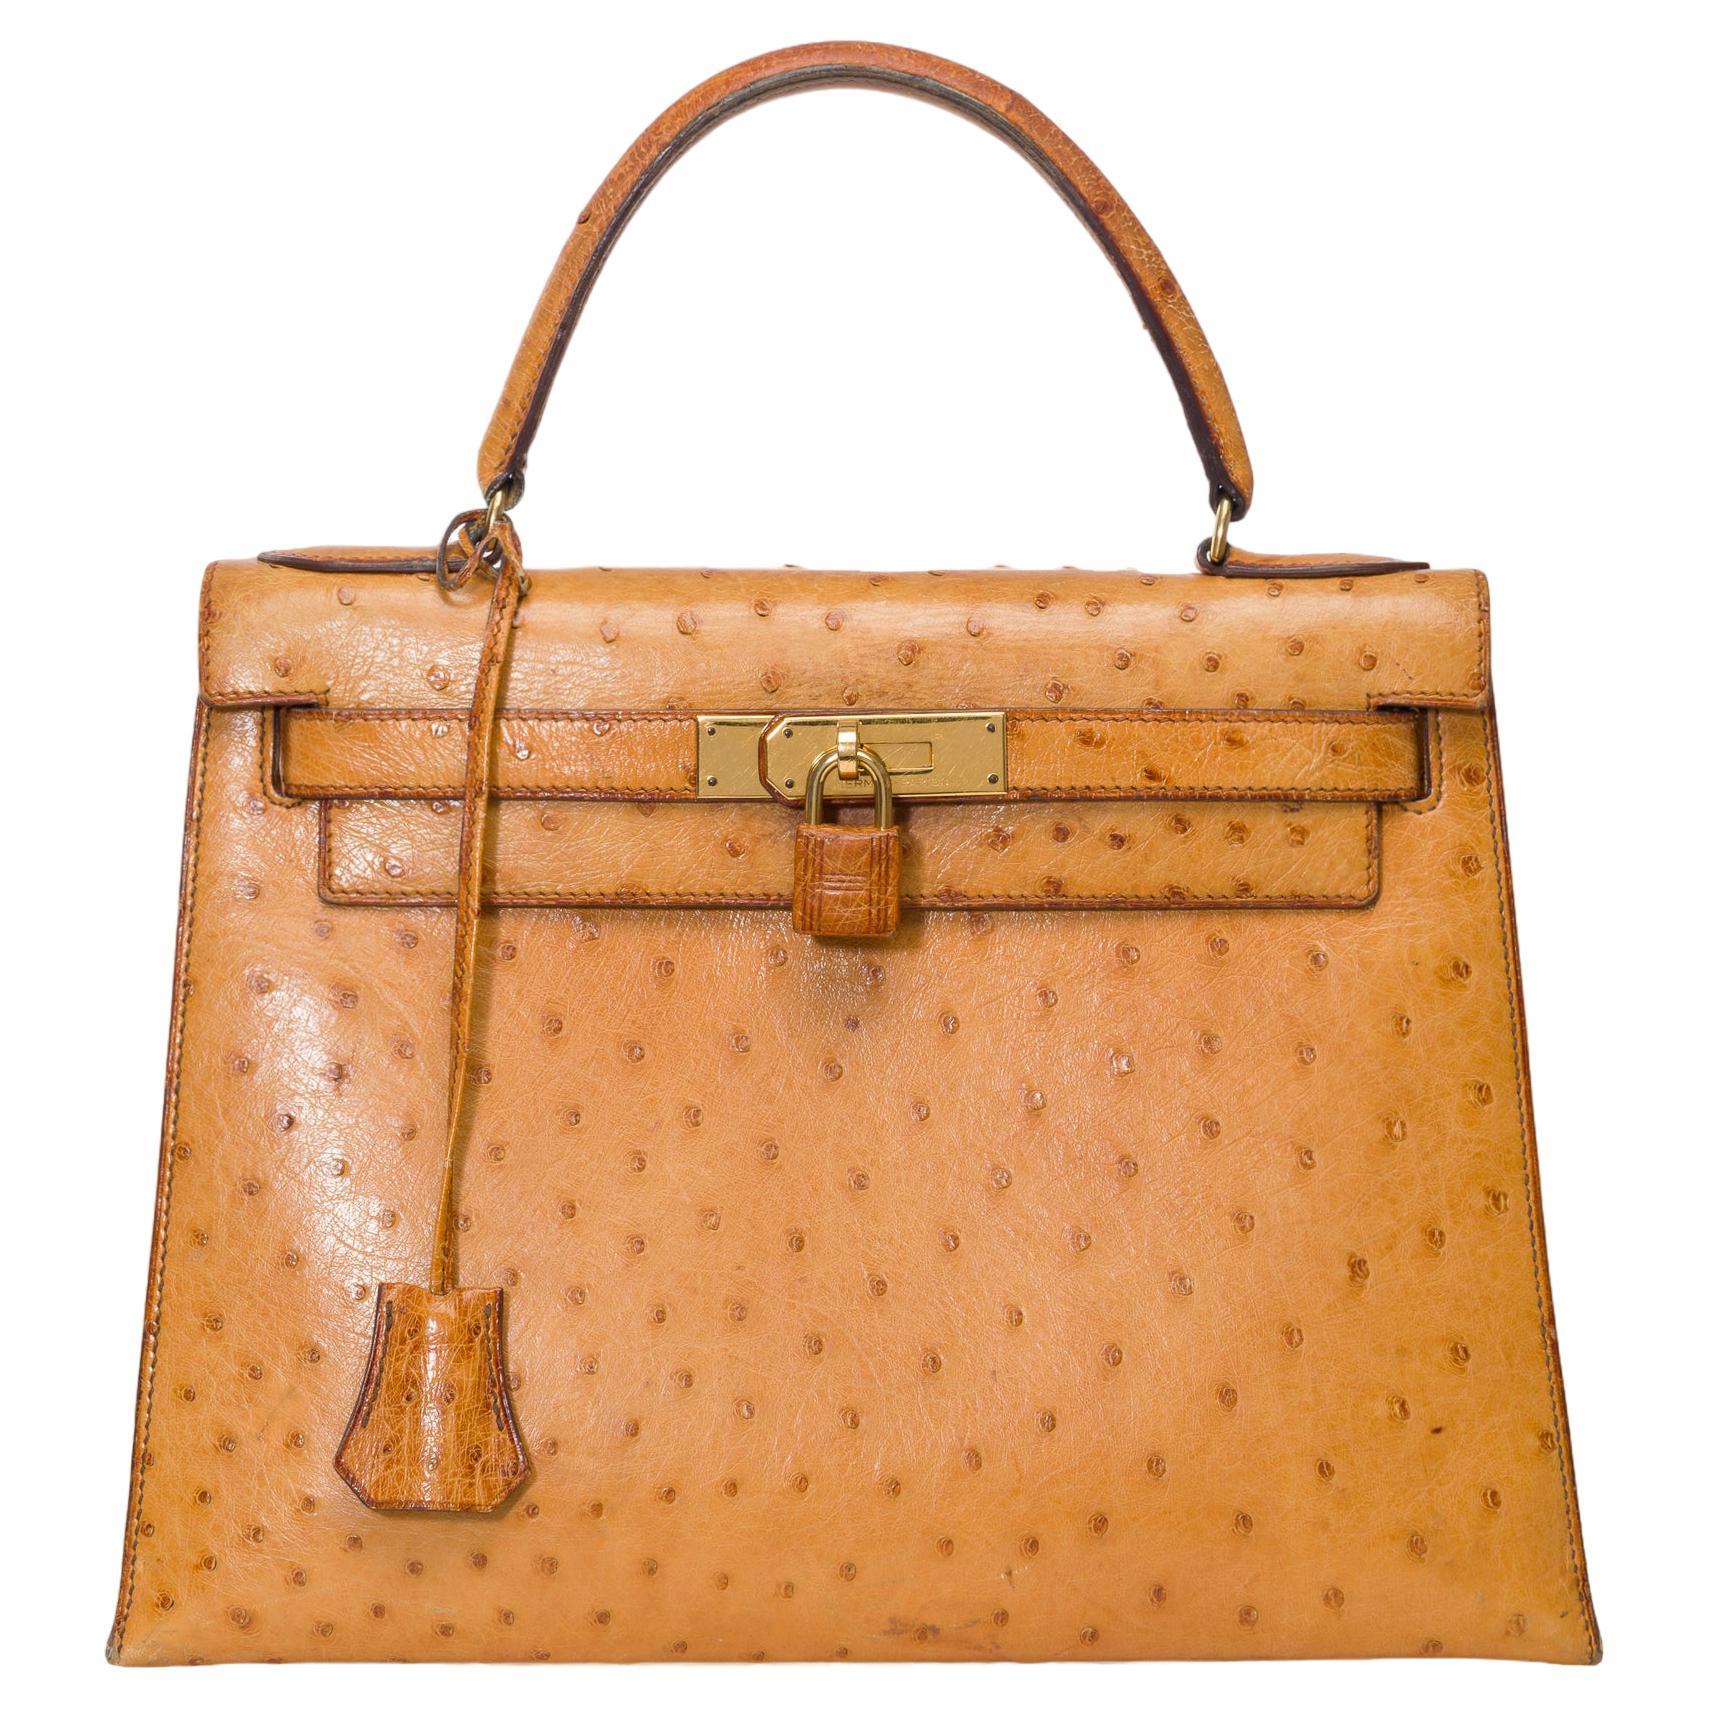 Gorgeous Hermès Kelly 28 sellier handbag in Ostrich Gold leather, GHW